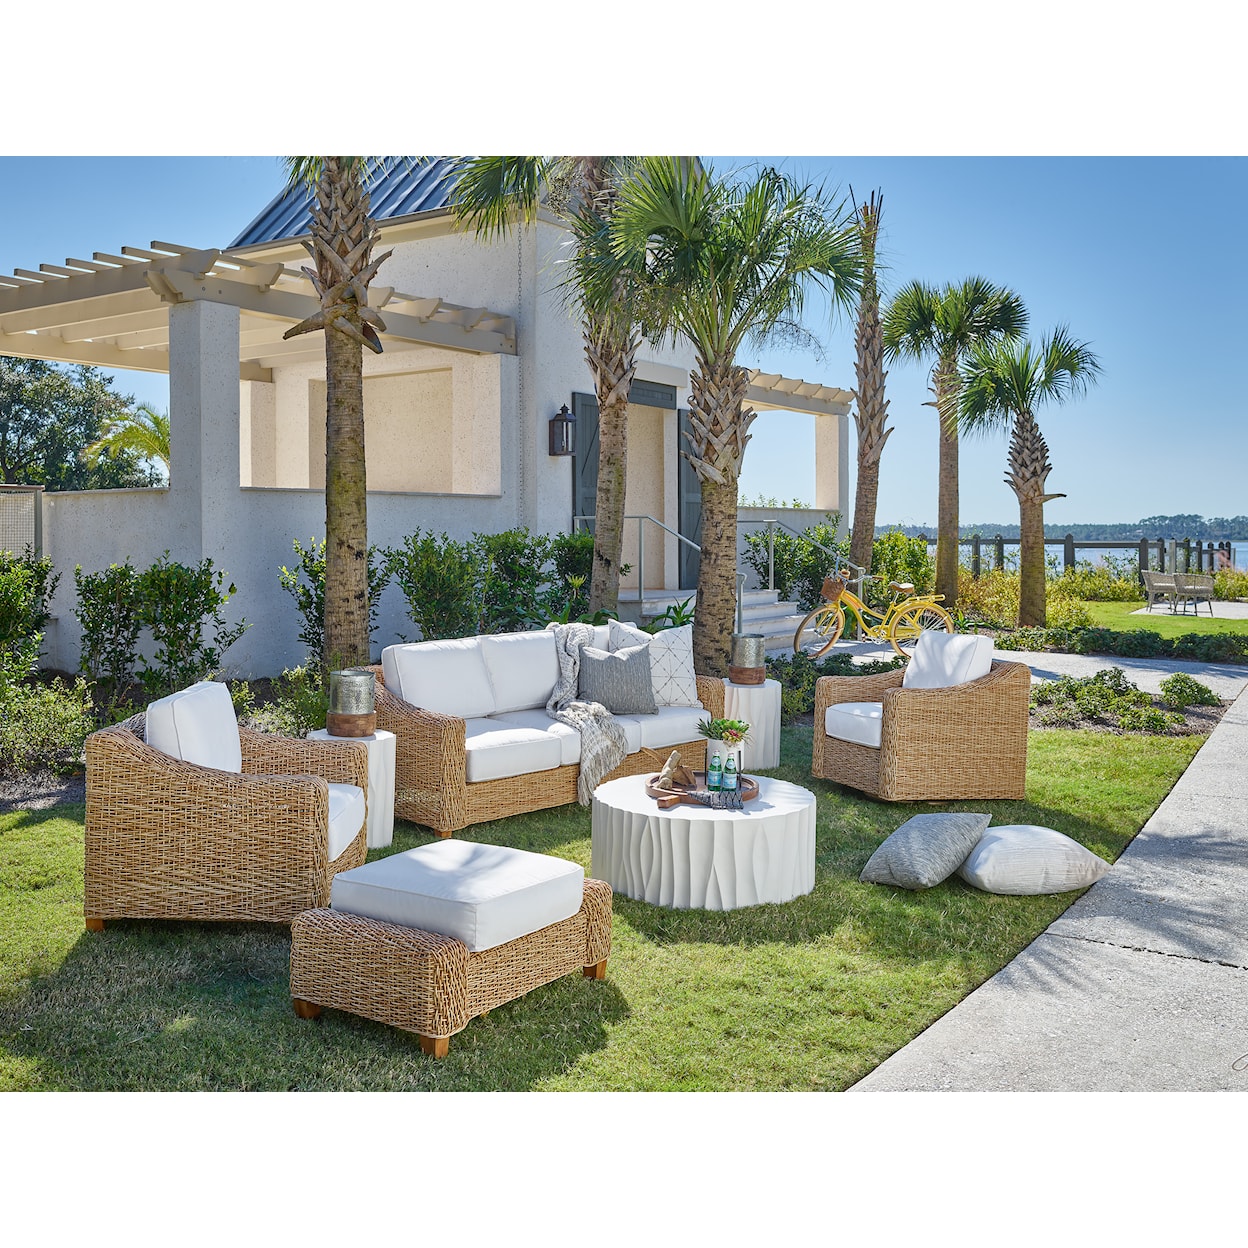 Universal Coastal Living Outdoor Coastal Living Lounge Chair